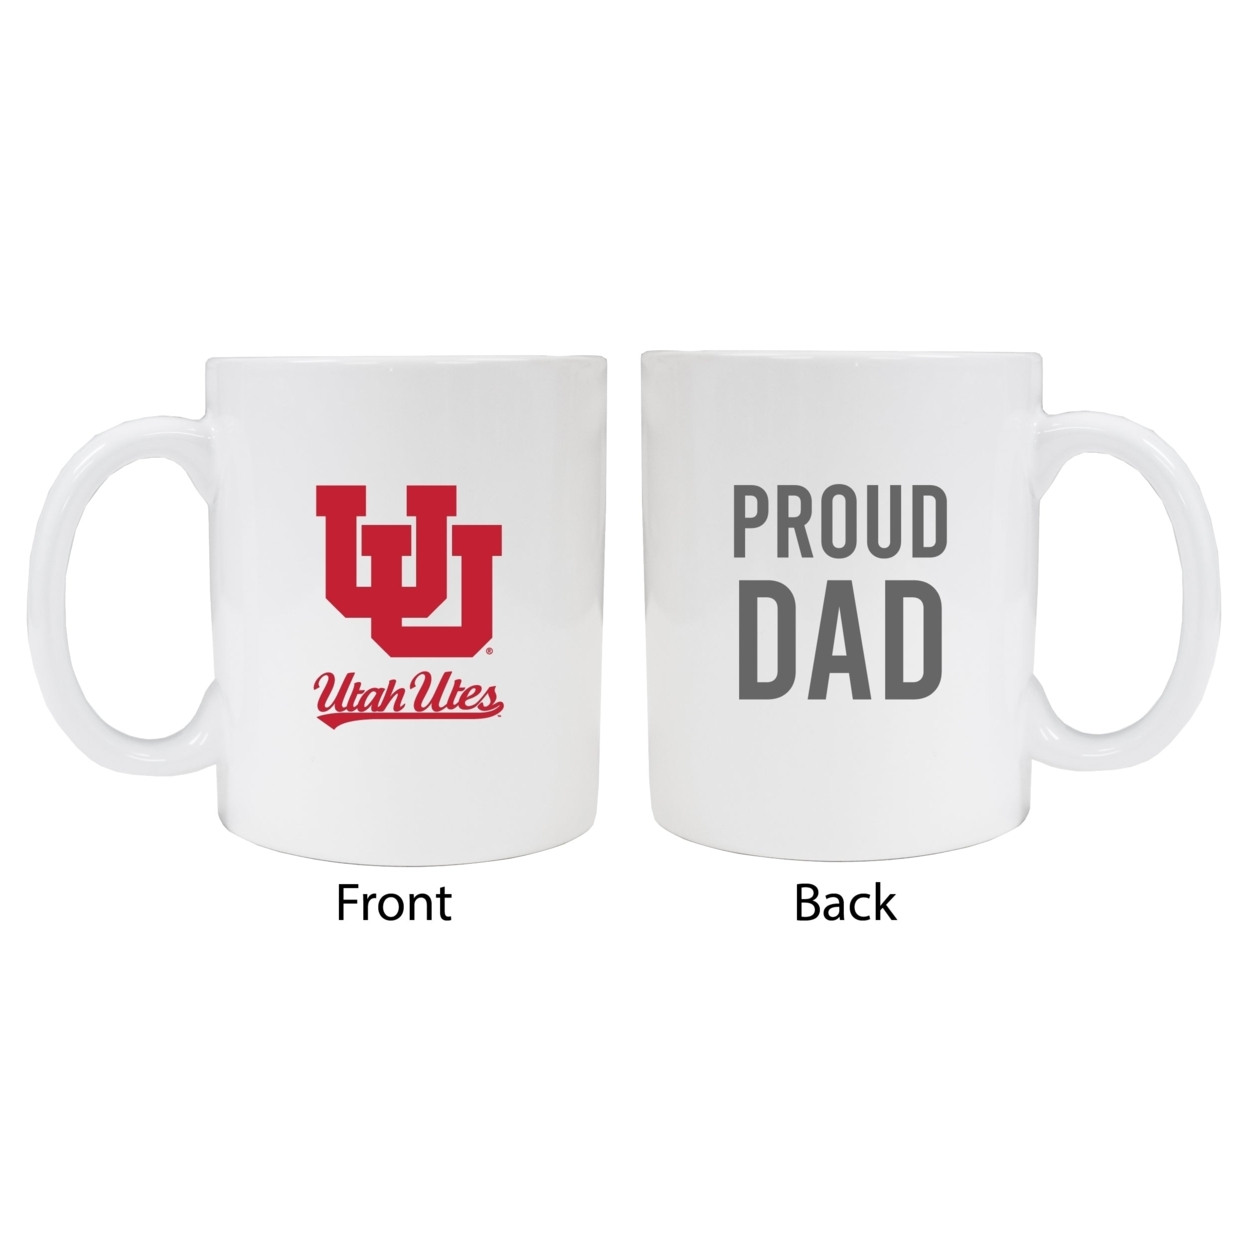 Utah Utes Proud Dad Ceramic Coffee Mug - White